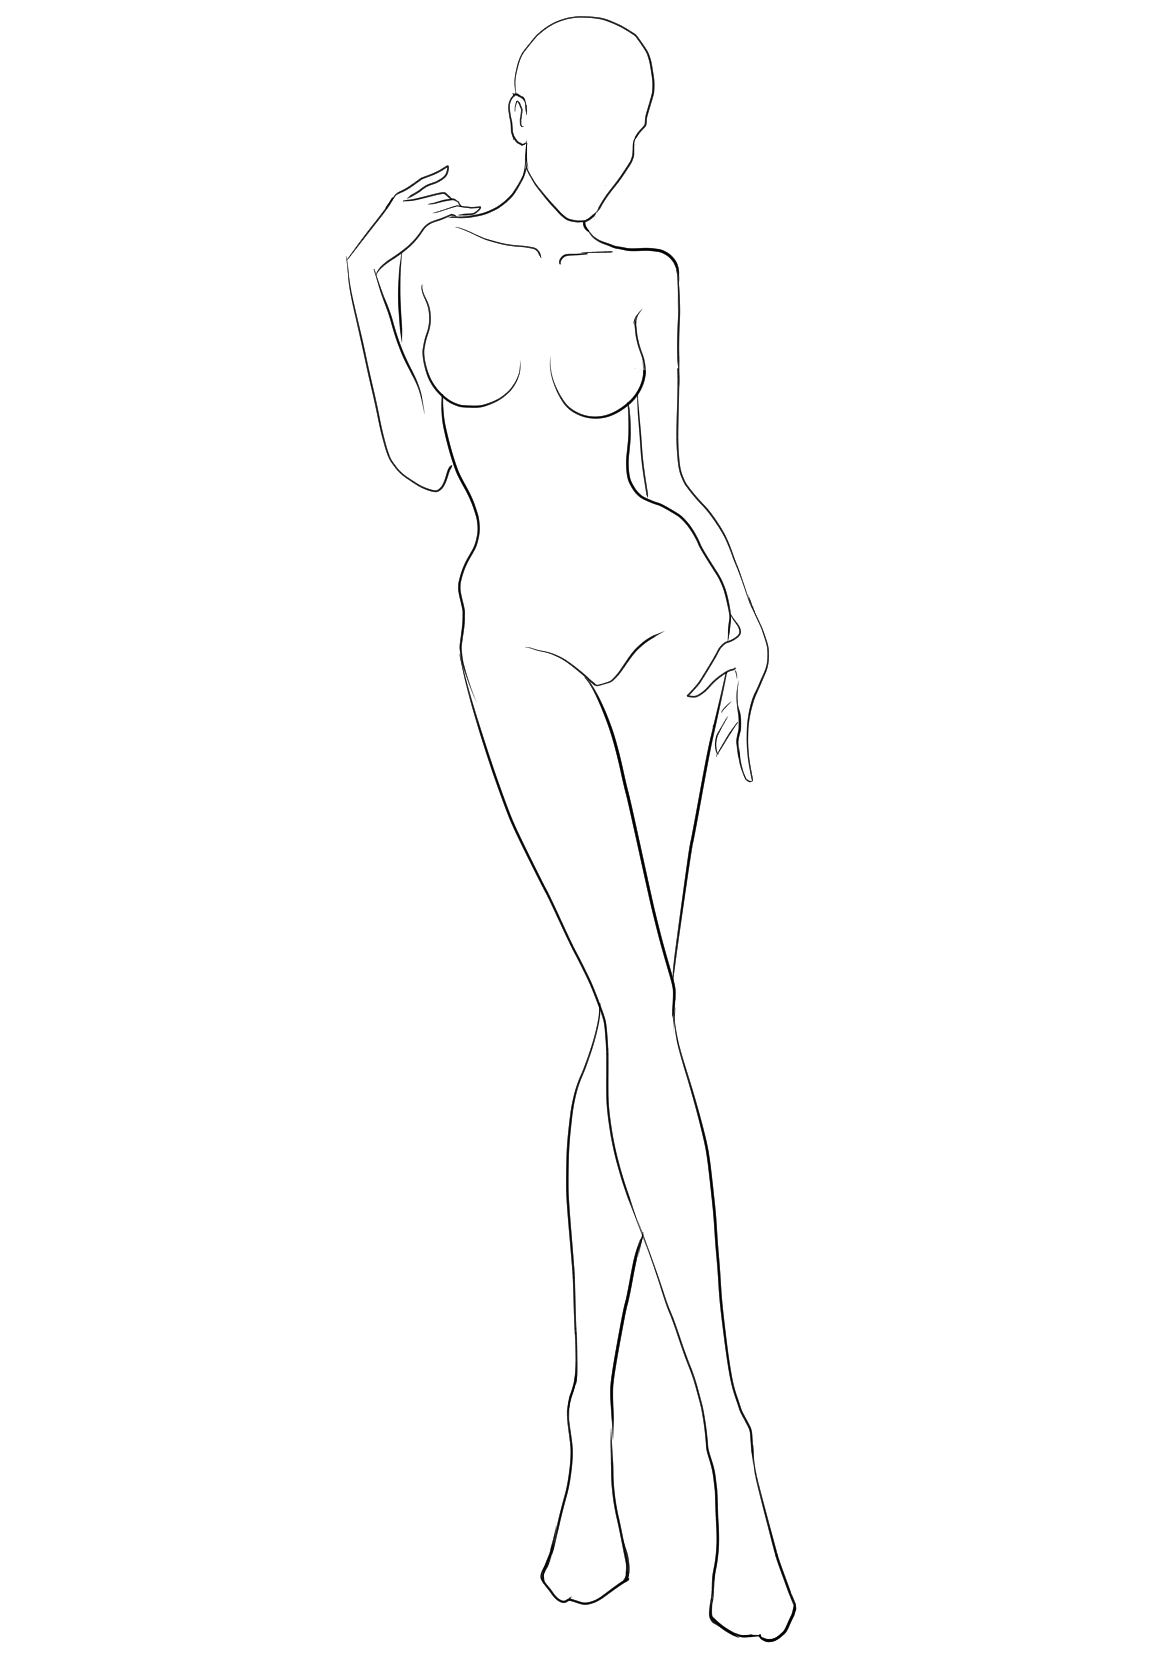 1168x1653 Drawn Templates Human Drawing Templates - Female Human Body Ske.....